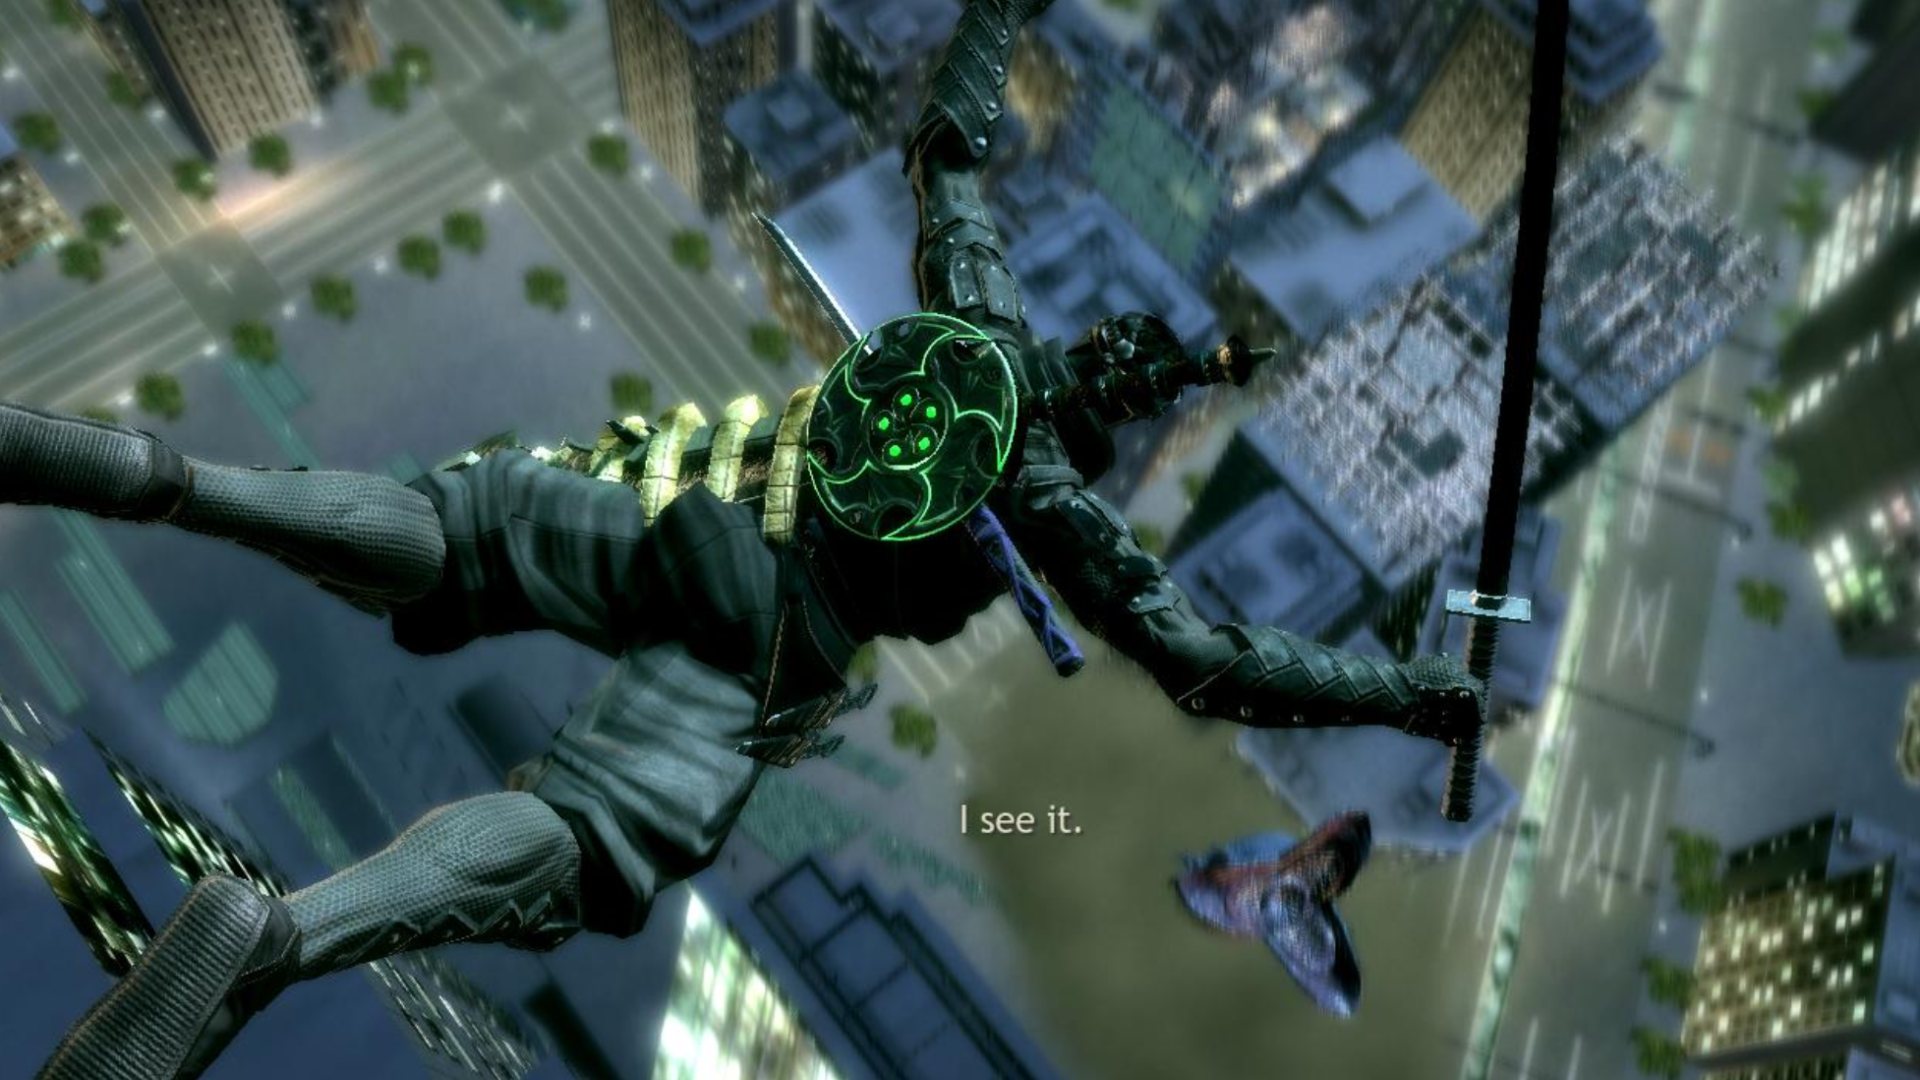 Ninja Blade protagonist falling through the sky